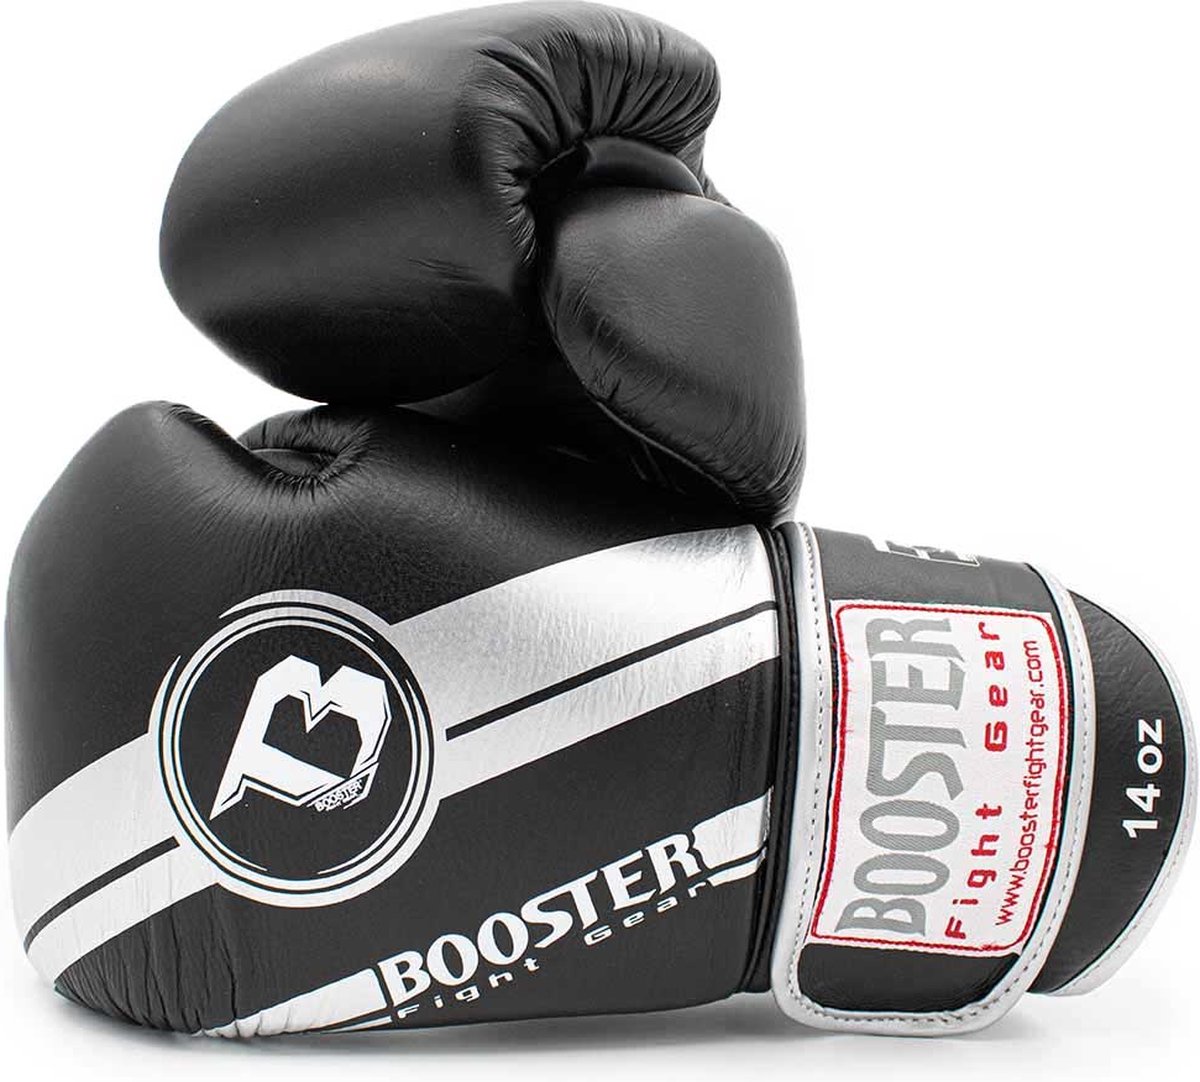 Booster Fightgear - BGL 1 V3 SILVER FOIL - 16 oz